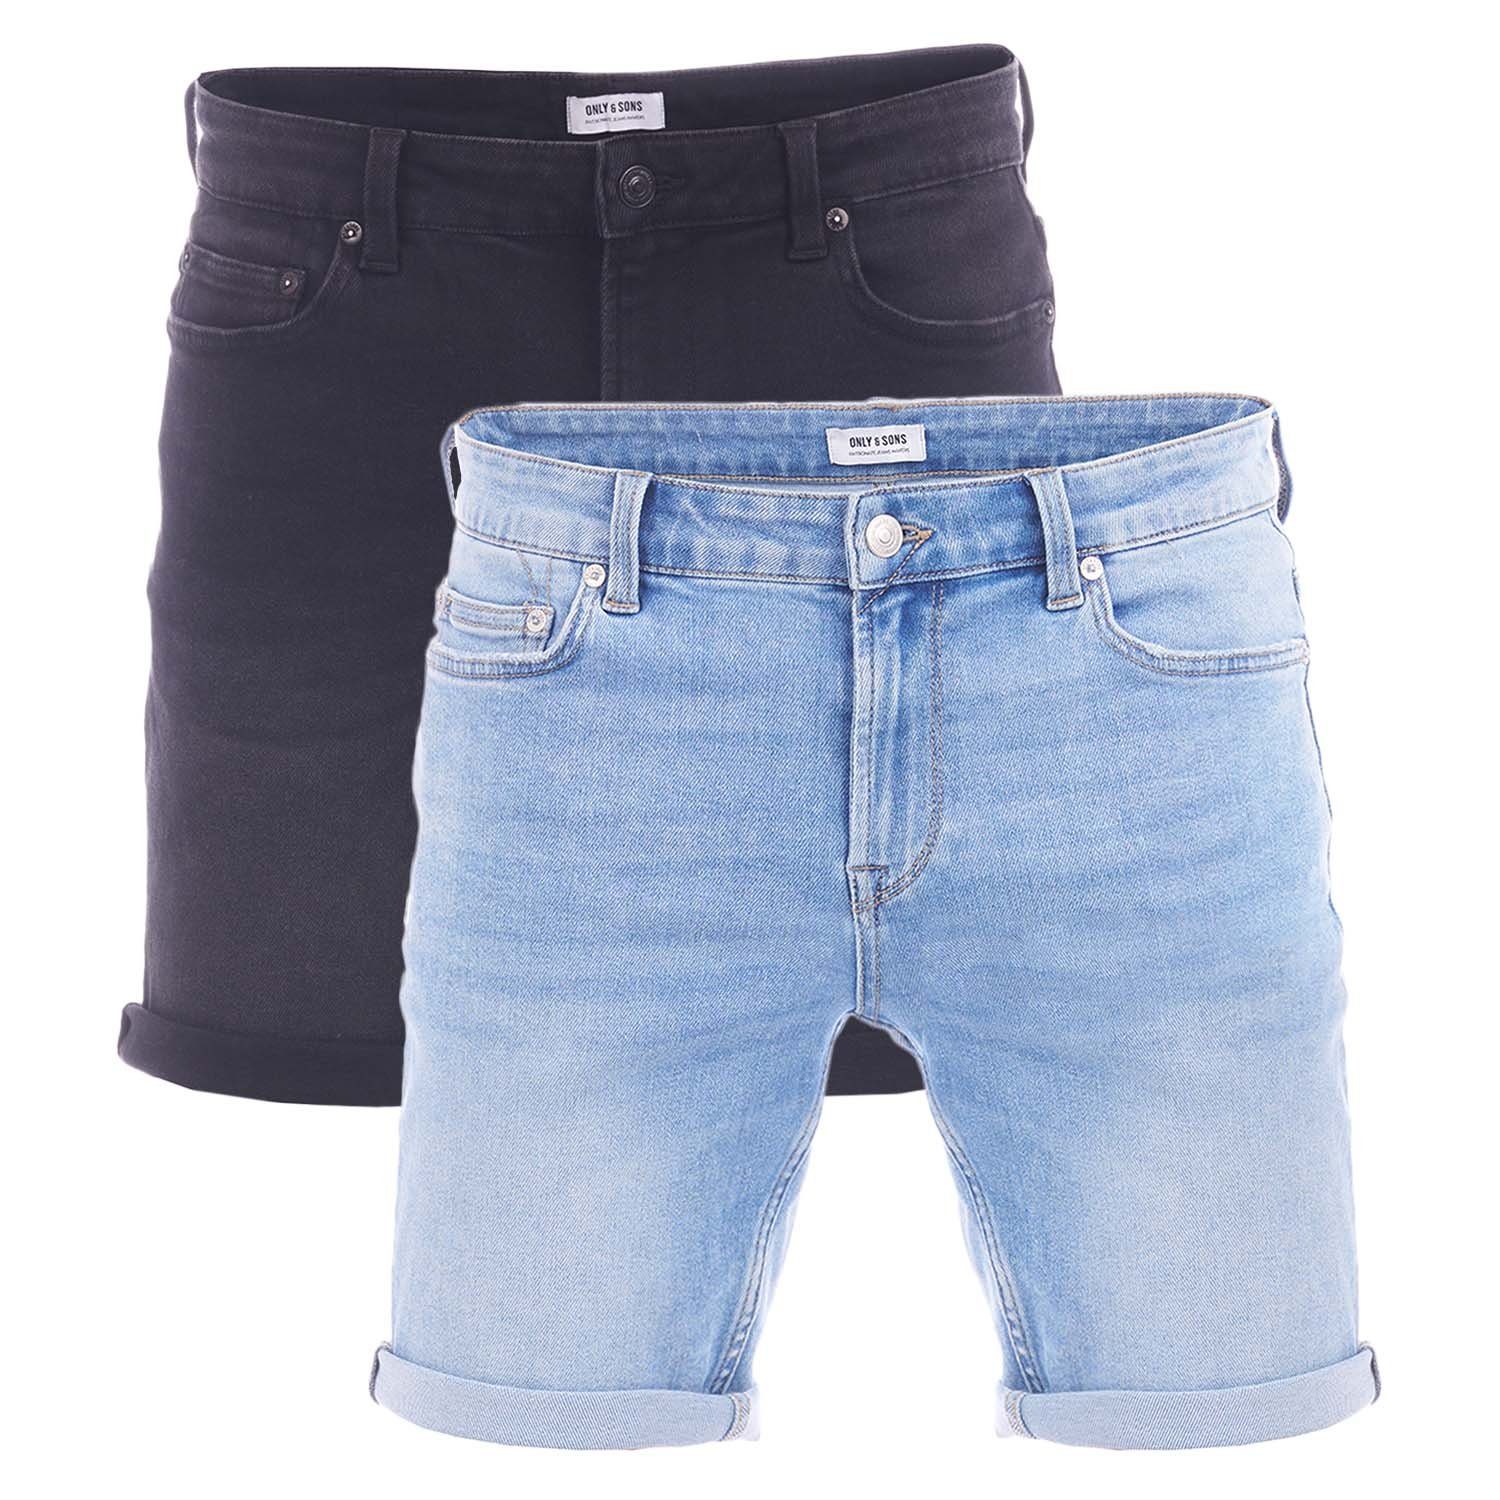 ONLY & SONS Jeansshorts Herren Shorts ONSPLY 2er Pack Regular Fit Bermudashorts mit Stretch Light Blue / Black (22029141)